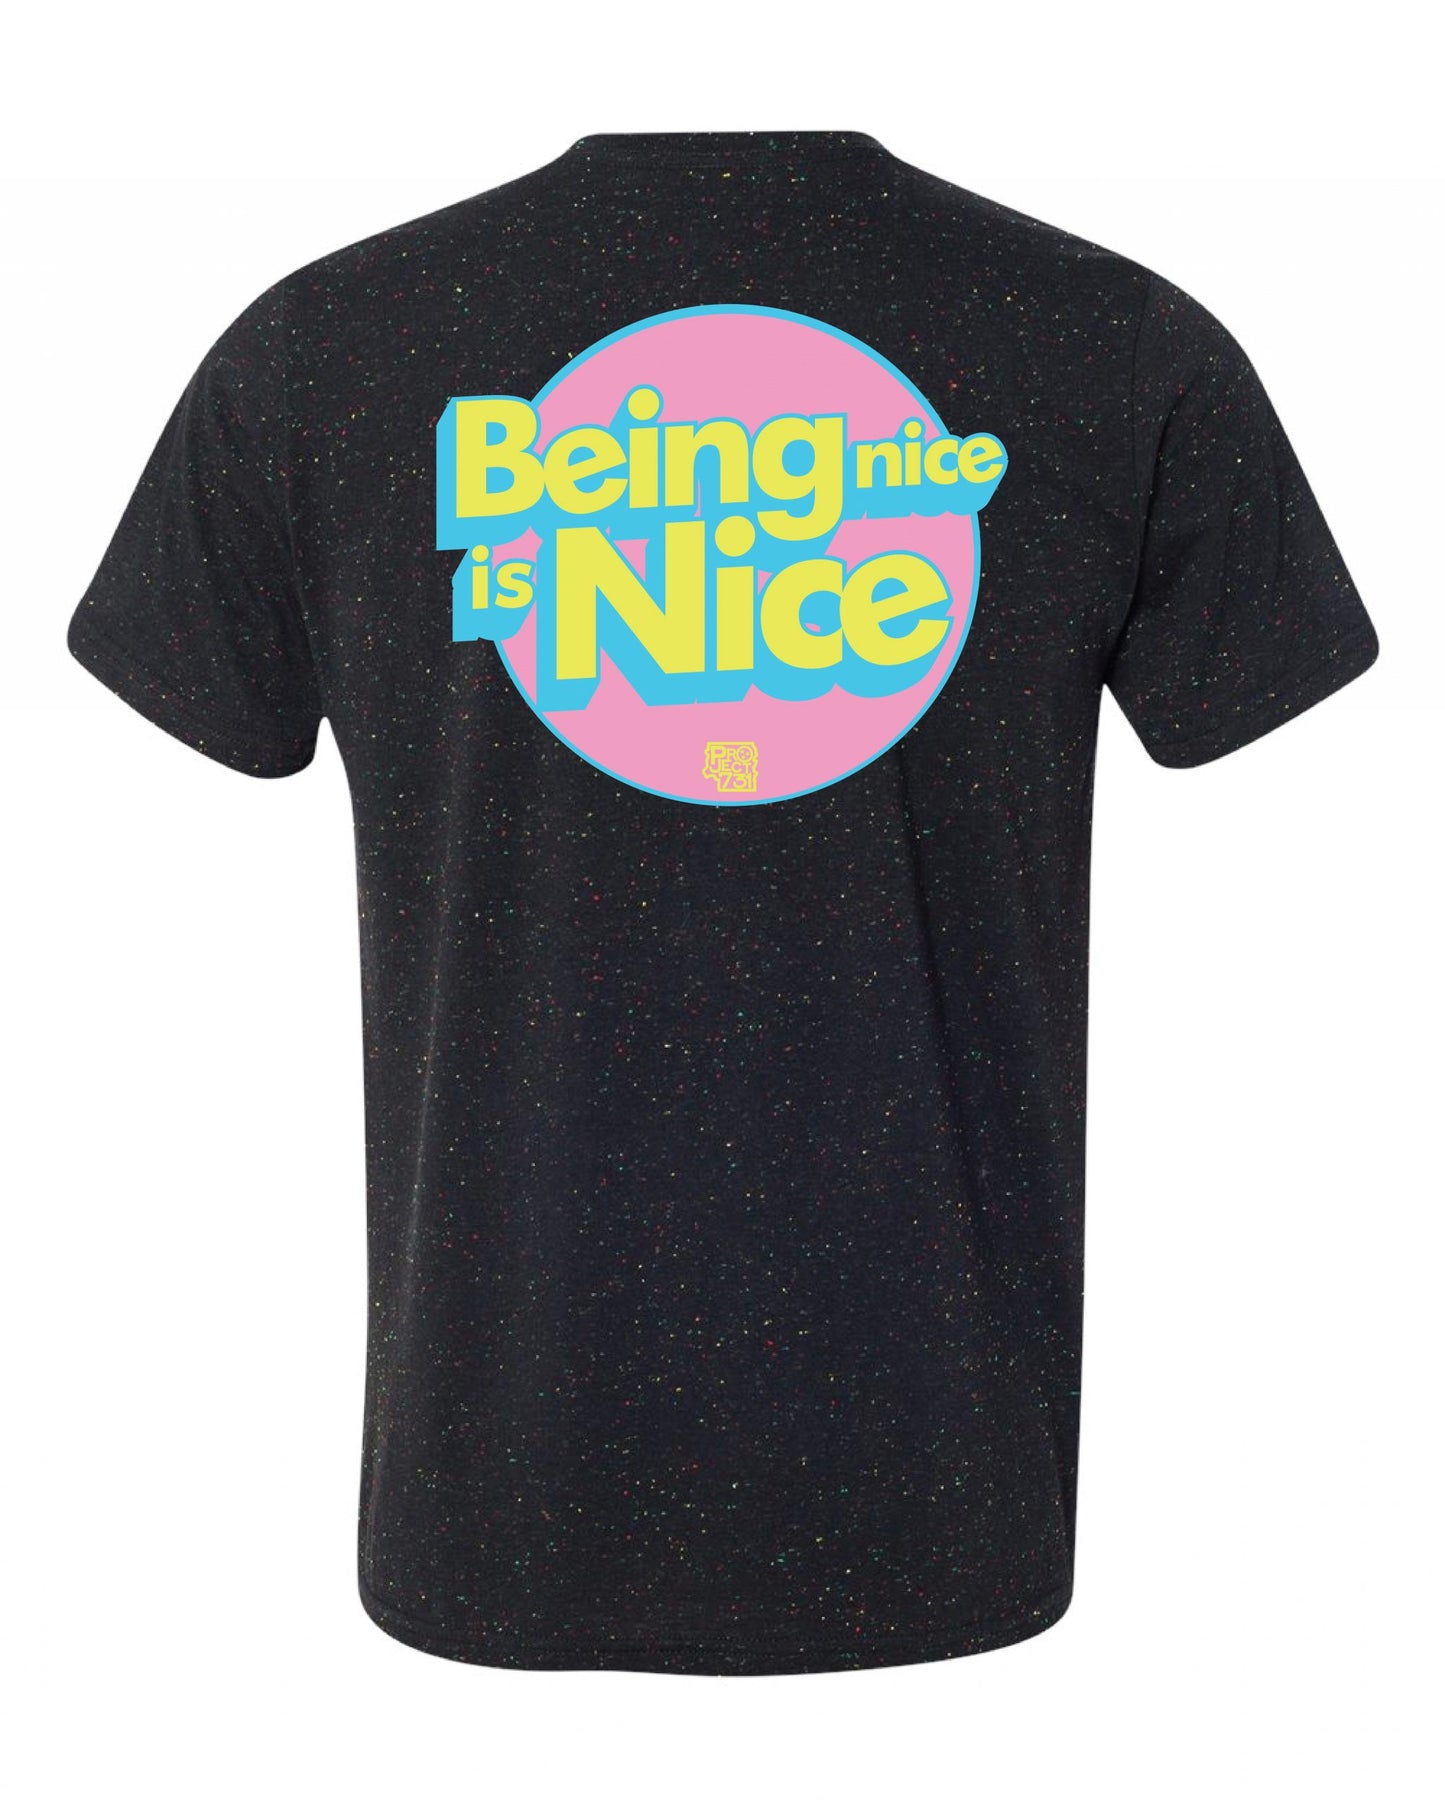 Being Nice is Nice T-shirt